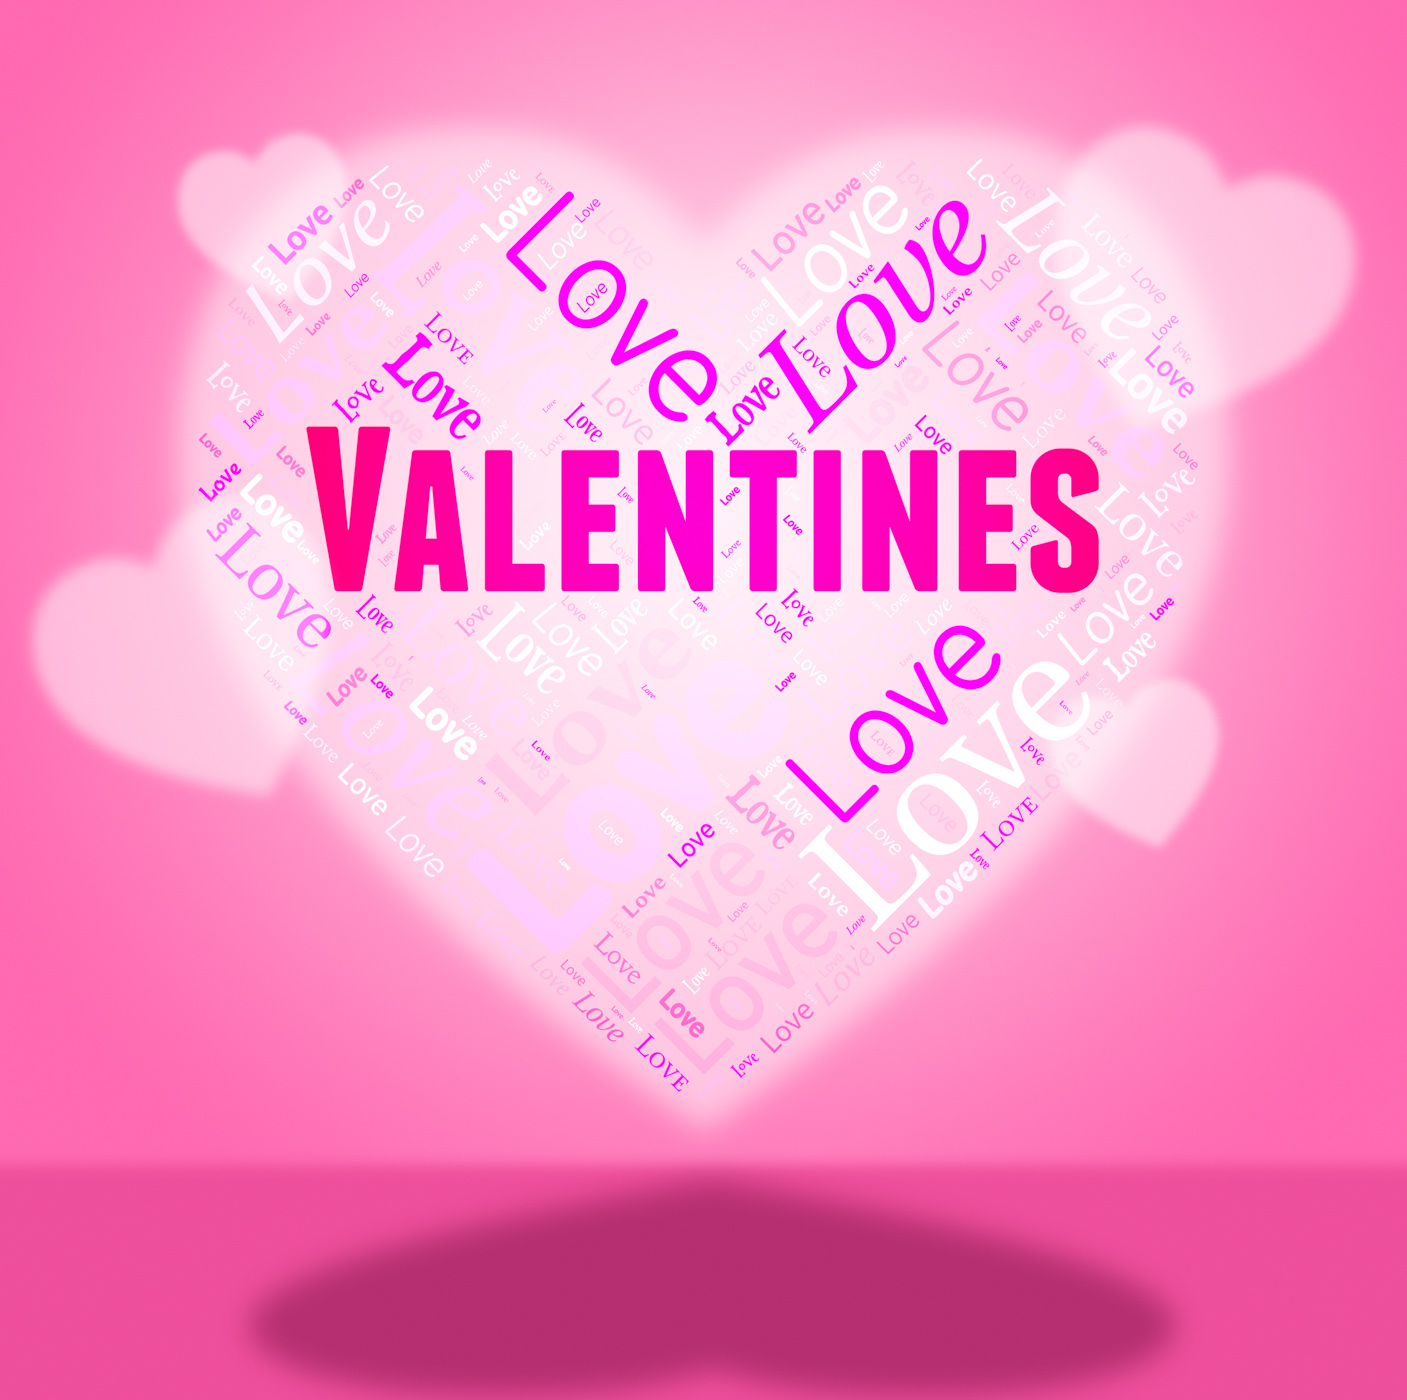 Valentines heart indicates celebration lover and hearts photo